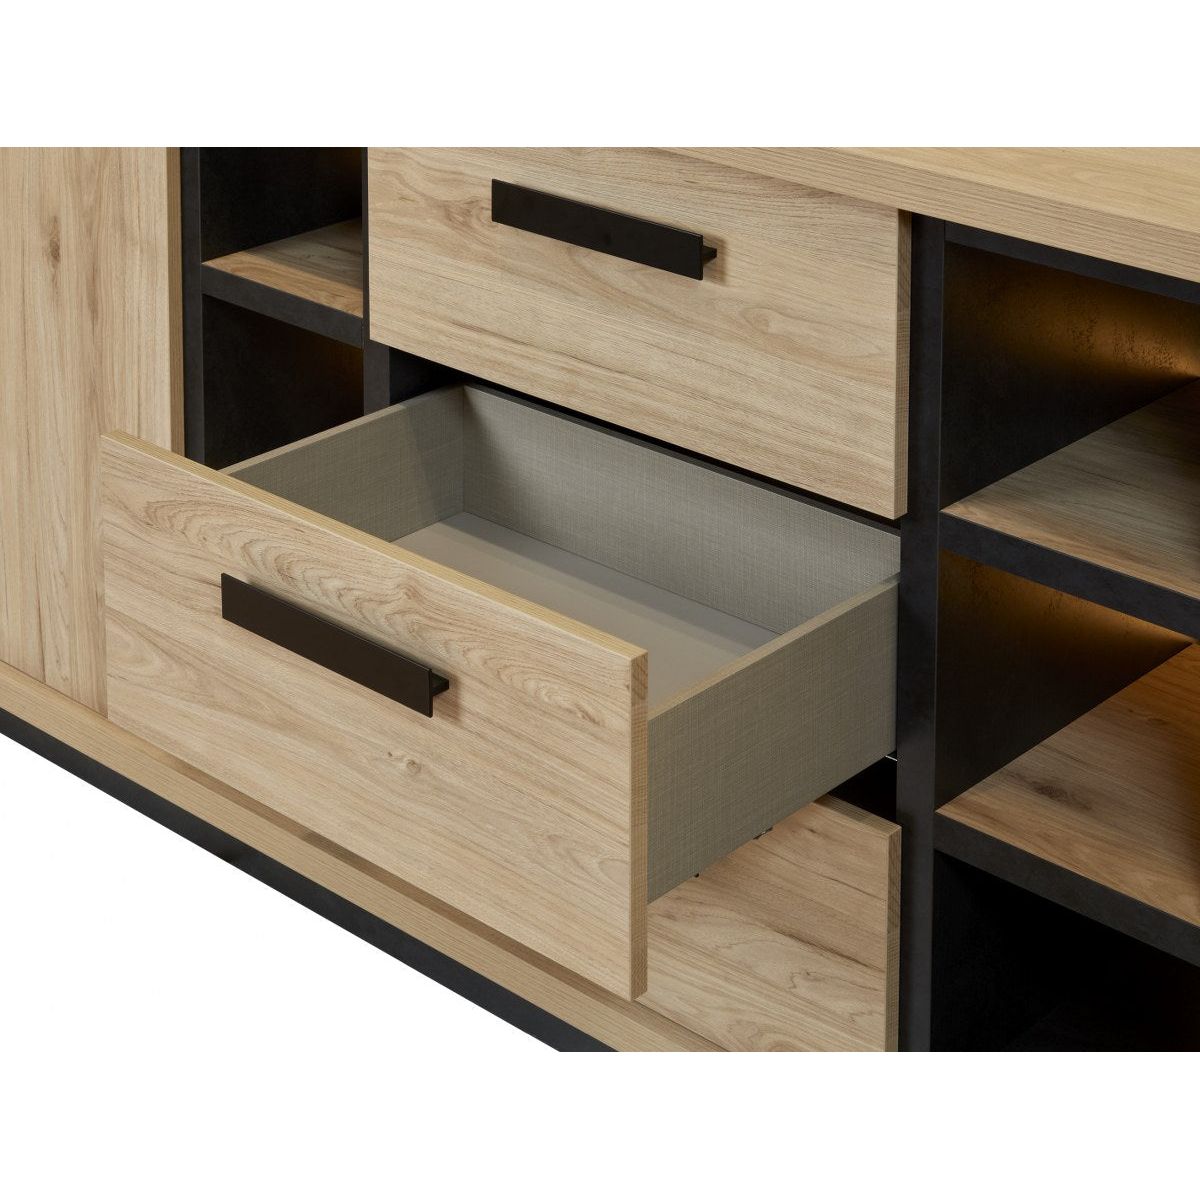 Dresser | Furniture series Tilly | brown, natural, black | 240x